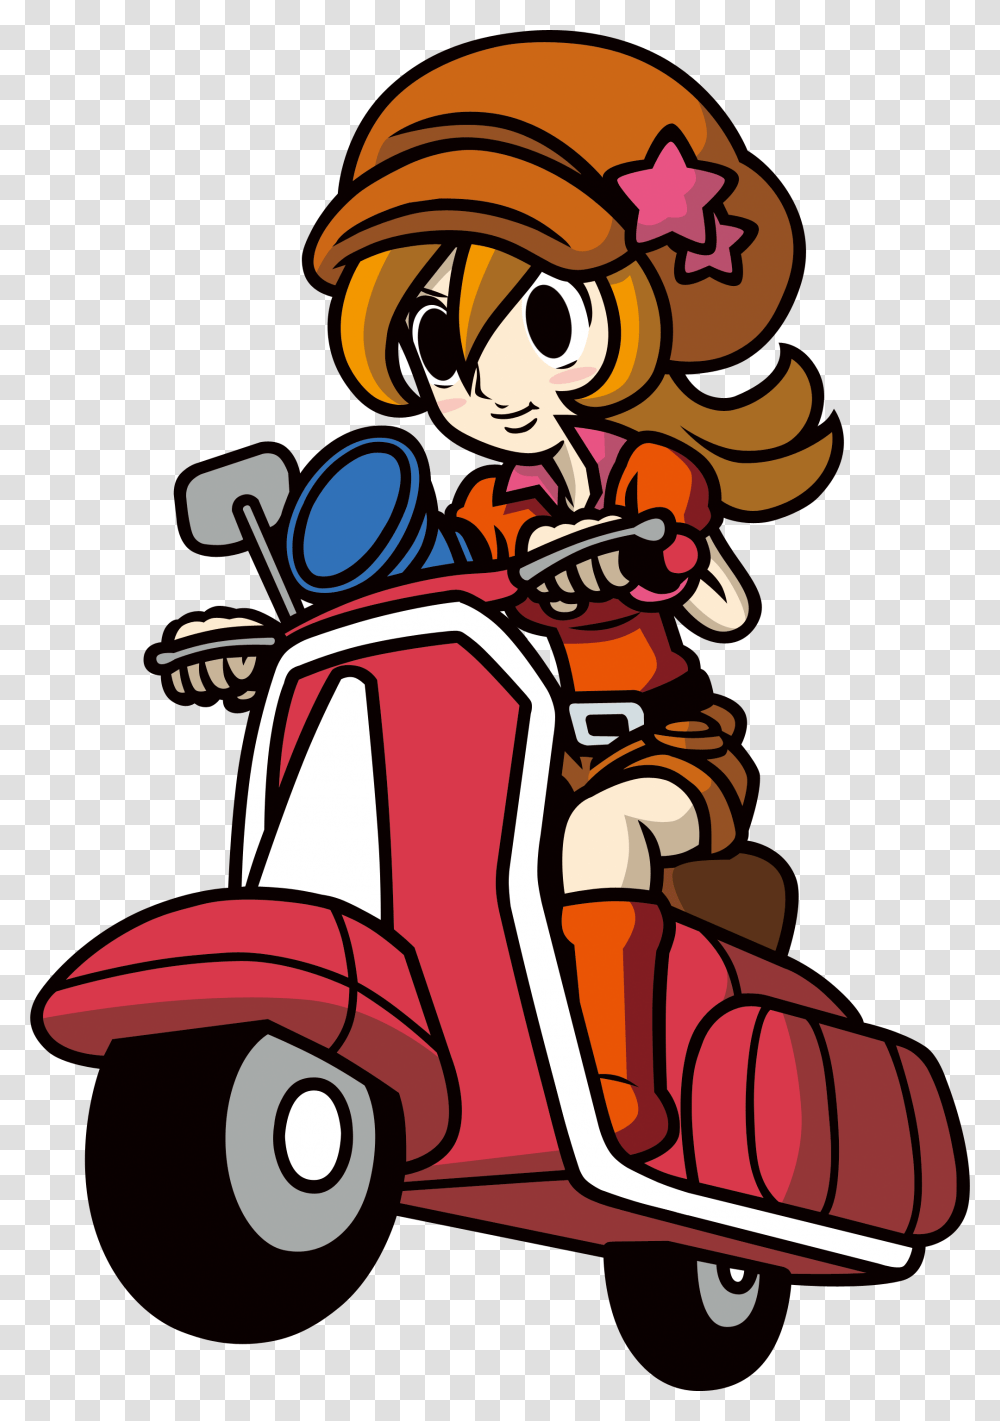 Super Smash Bros For Wii U Potd Thread Smash Discussion, Vehicle, Transportation, Scooter, Lawn Mower Transparent Png